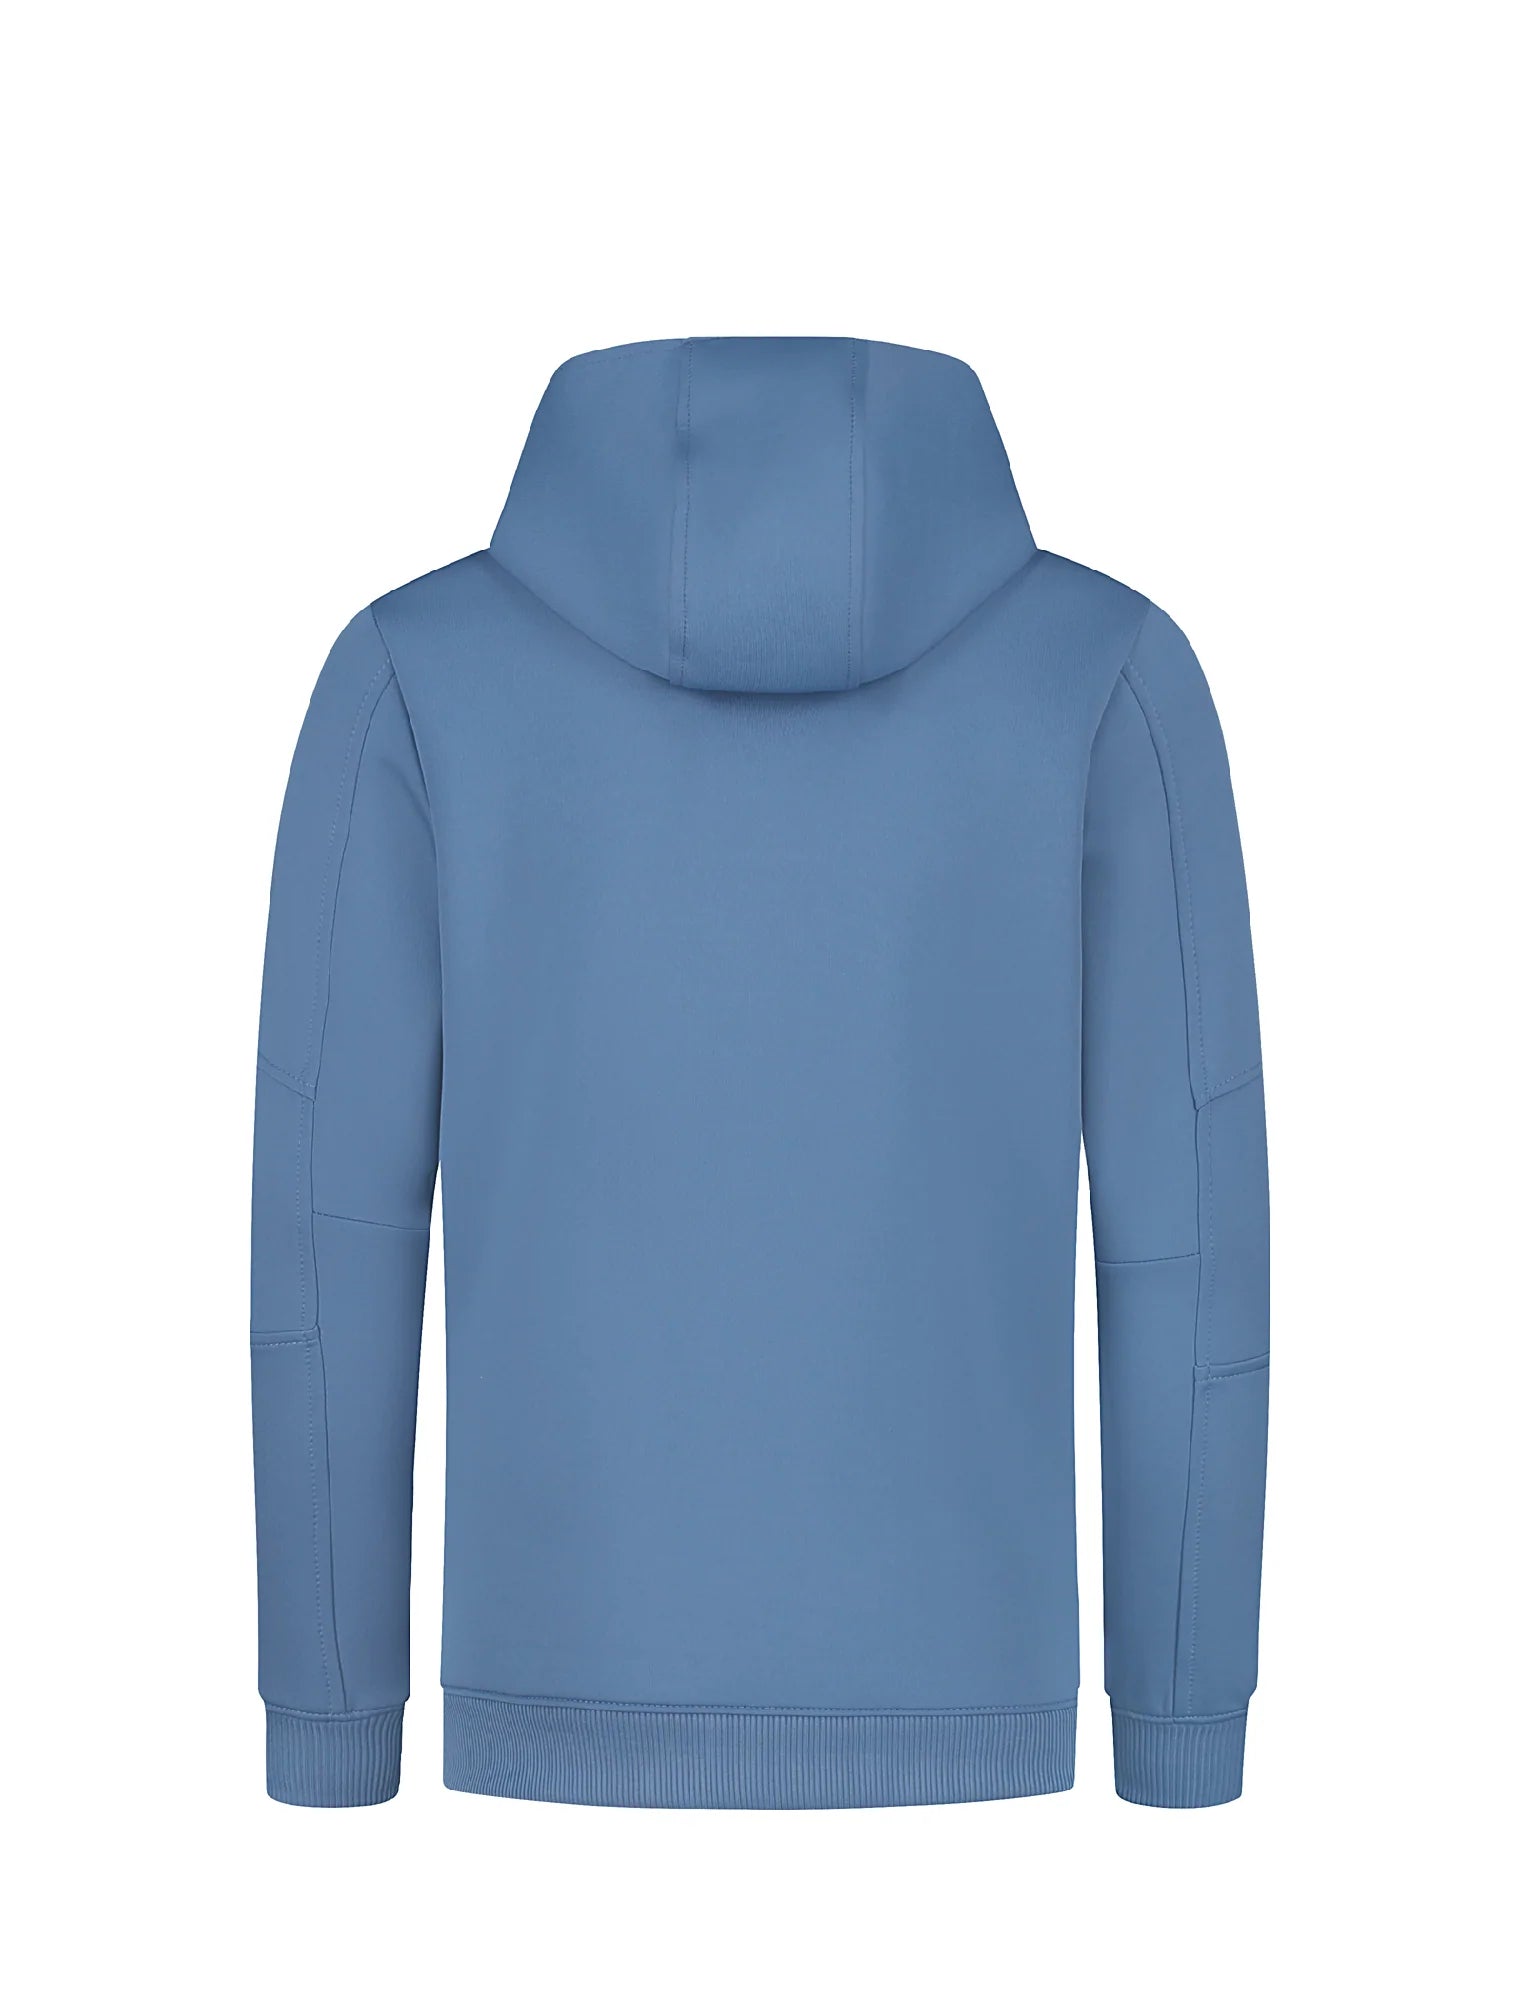 Unisexs Hooded sweater van Ballin Amsterdam in de kleur Mid blue in maat 176.